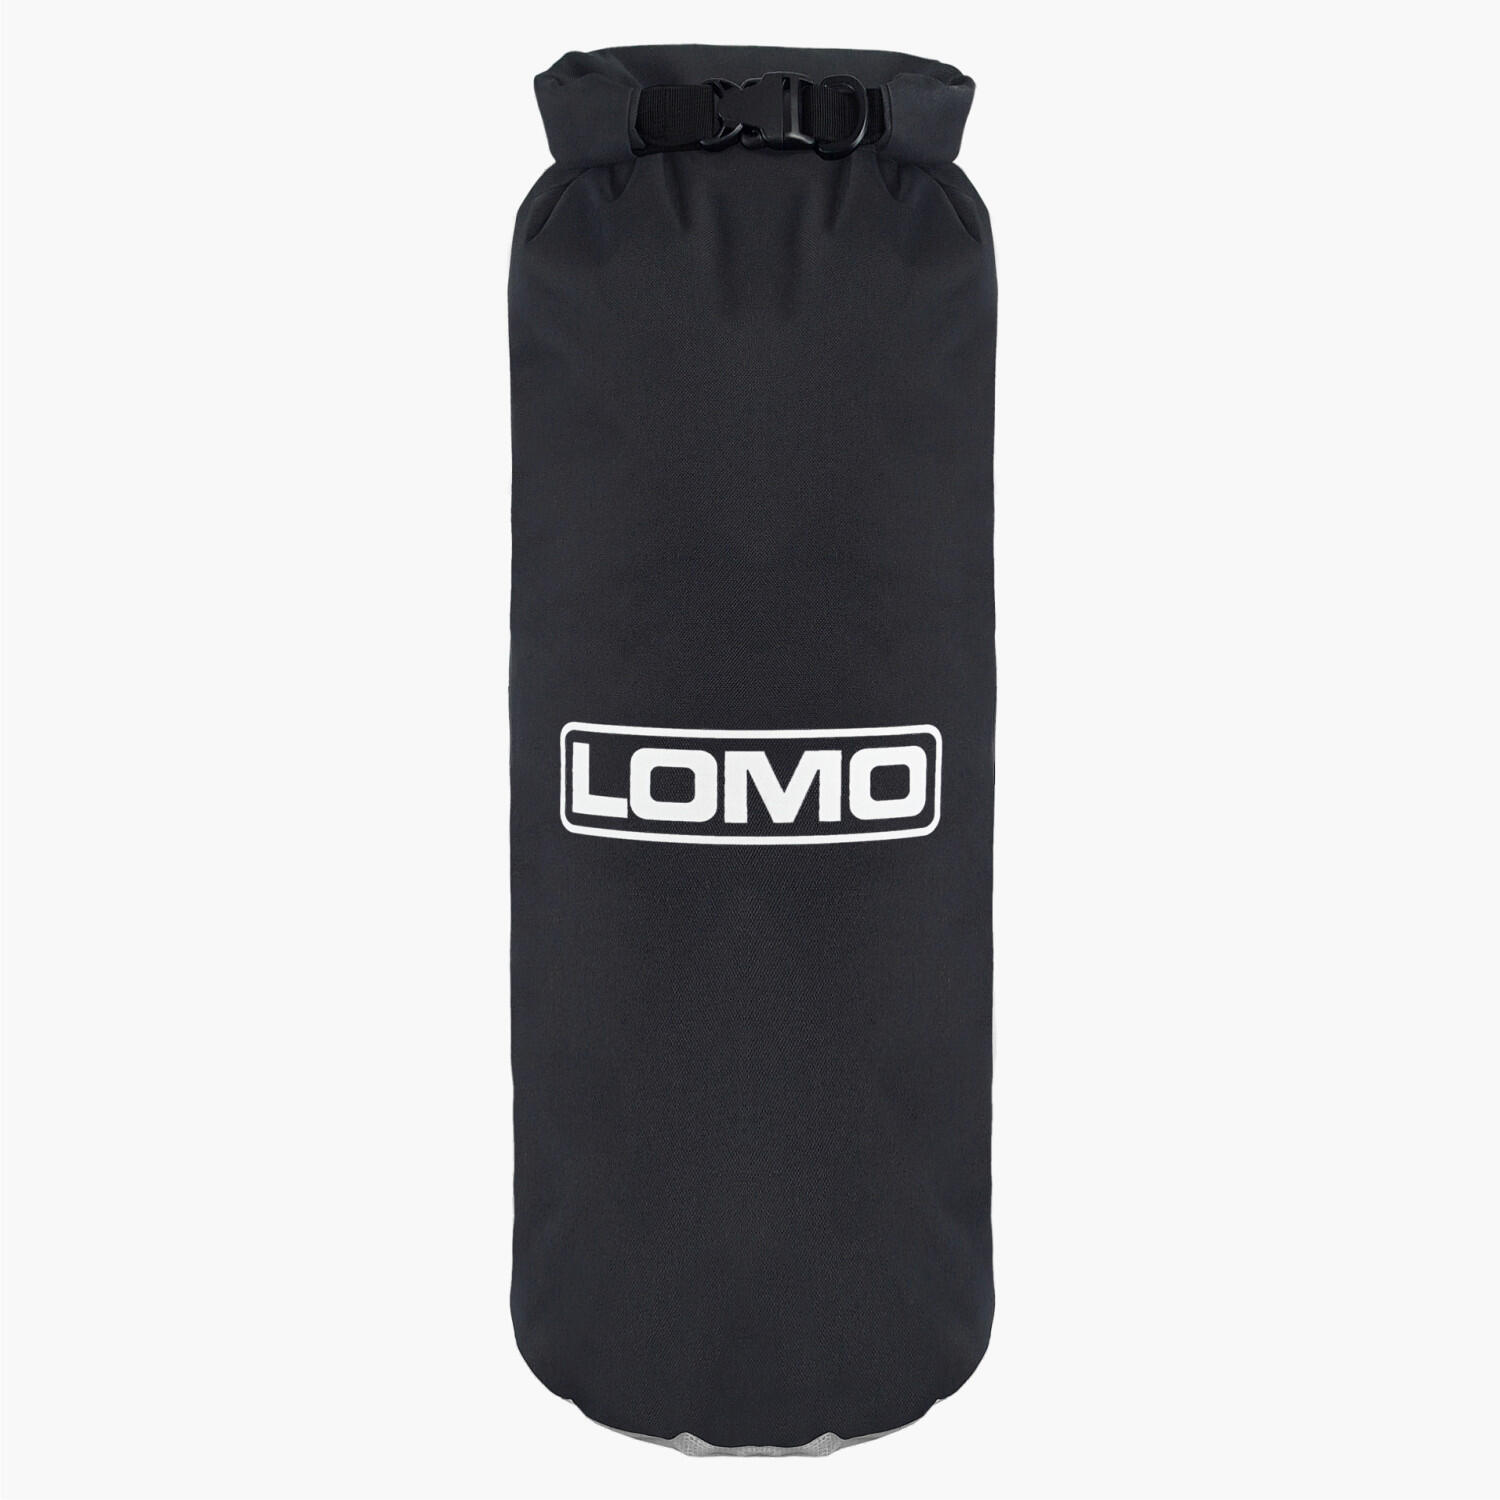 Lomo 12L Dry Bag - Black with Window 4/7